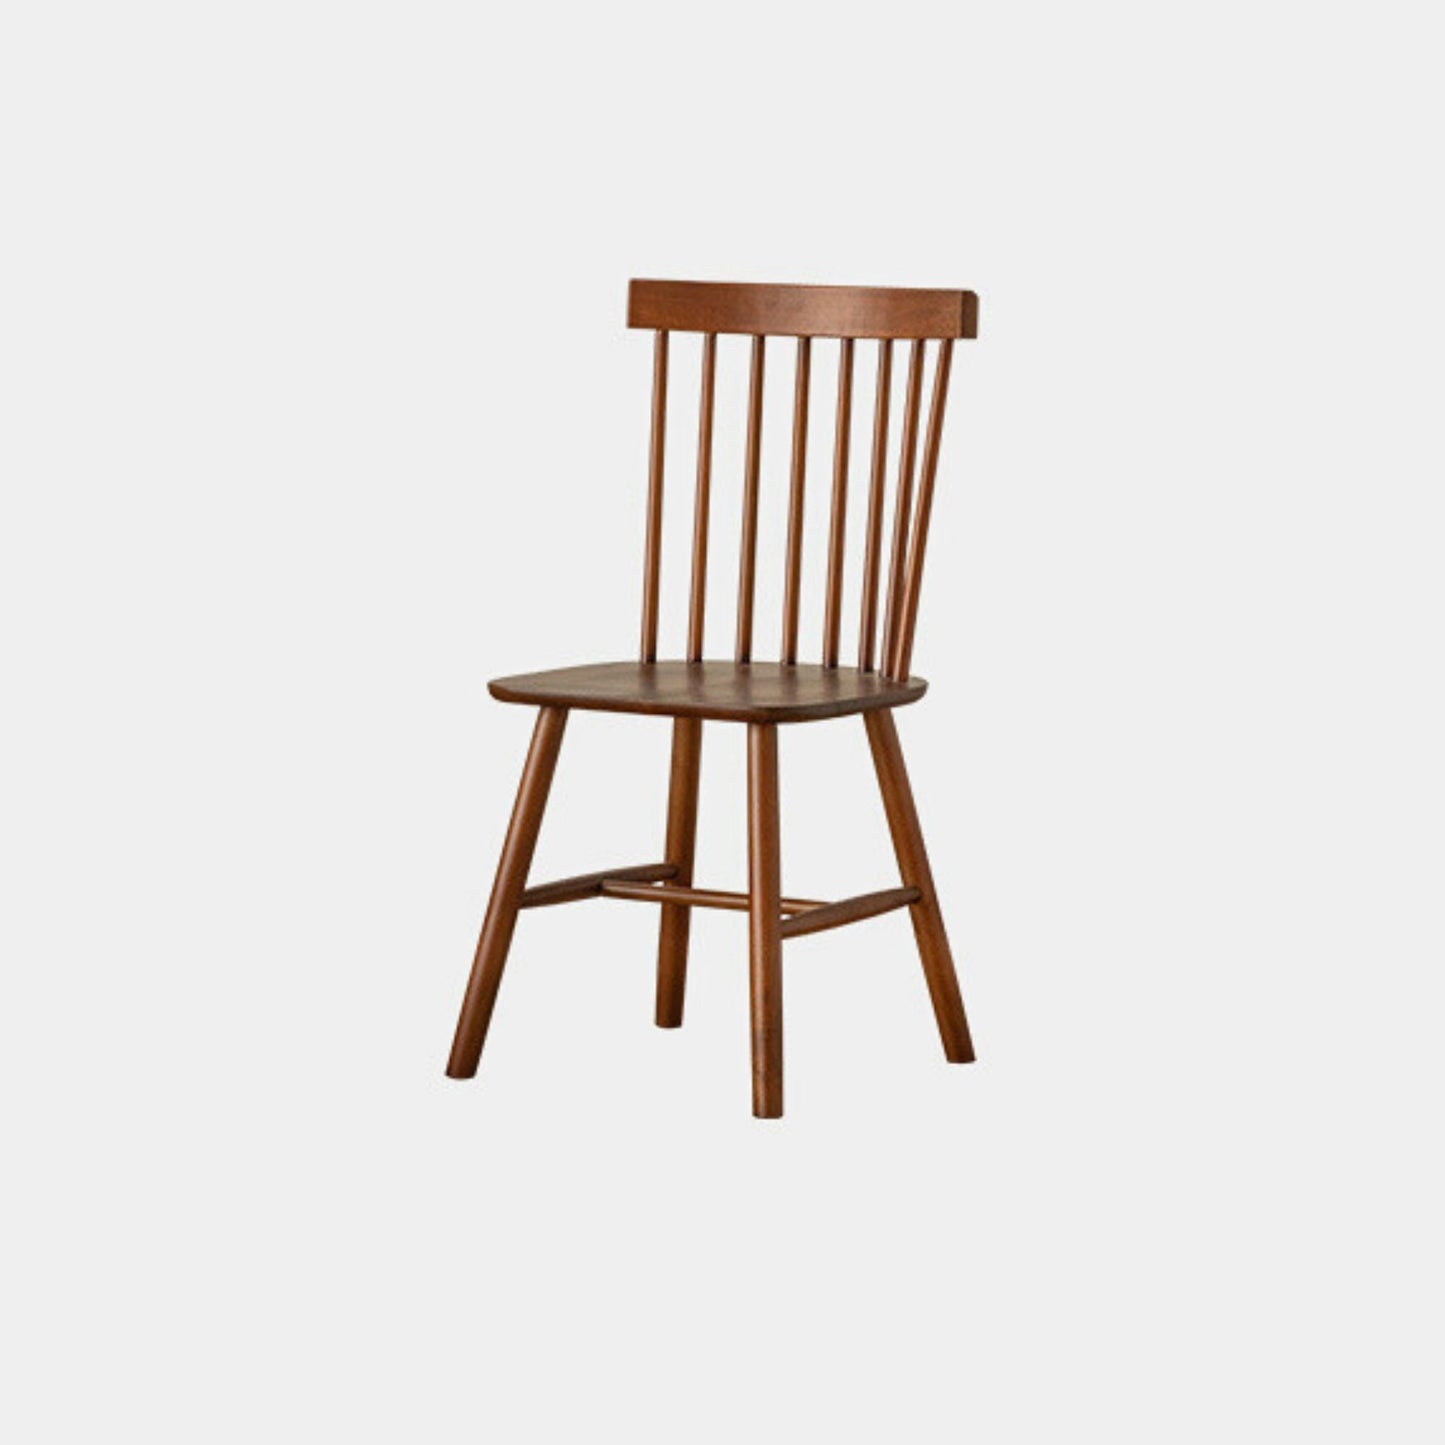 Toby poplar wood chair